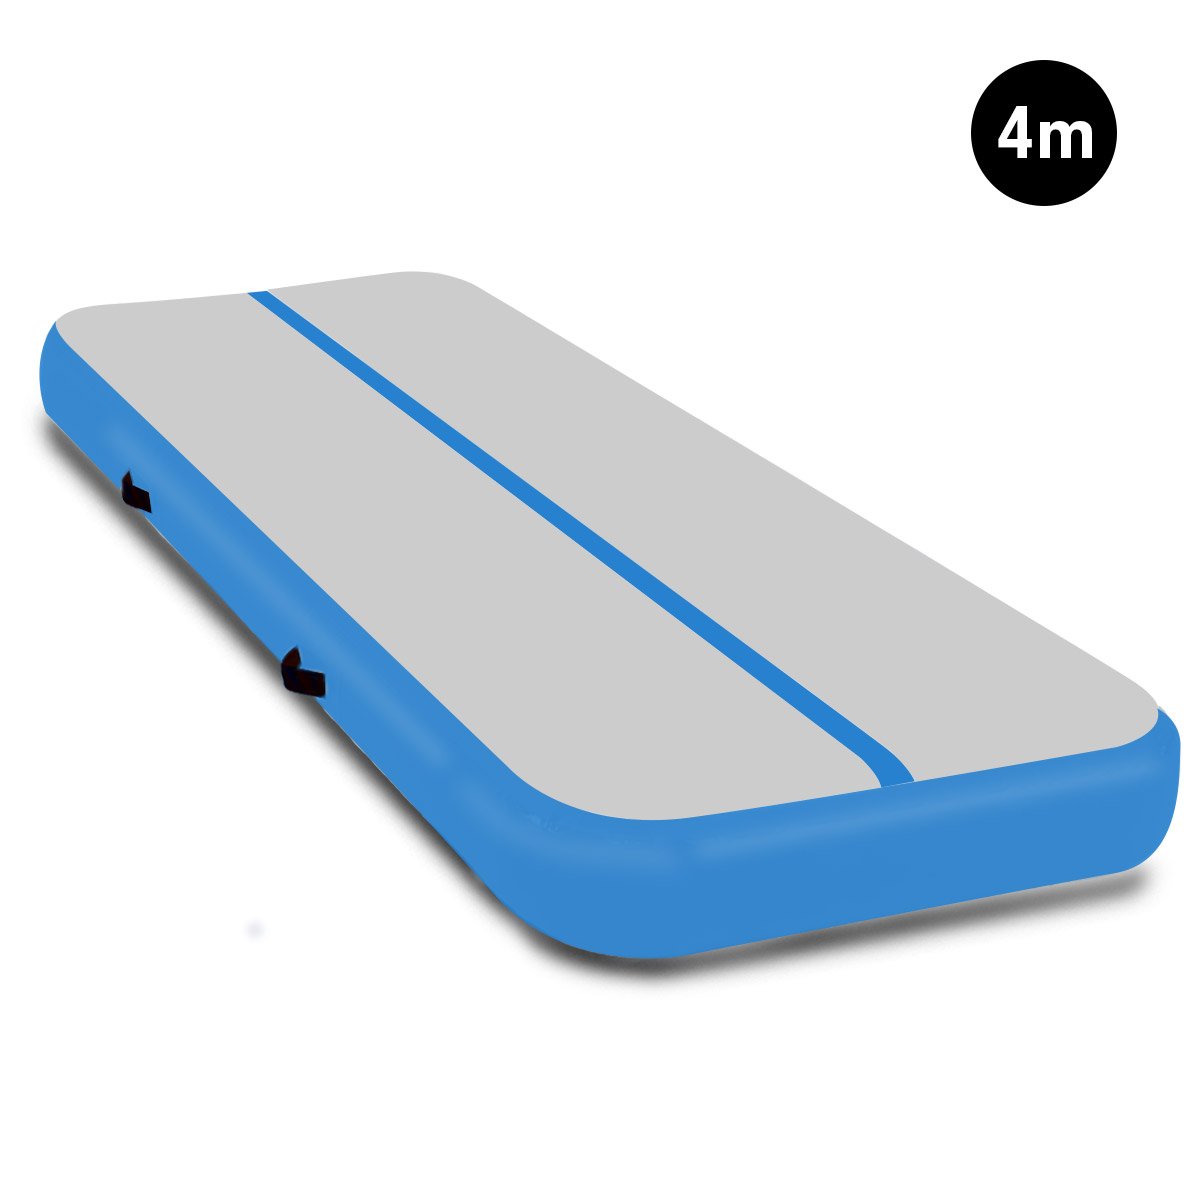 4m x 2m Air Track Gymnastics Mat Tumbling Exercise - Grey Blue 1